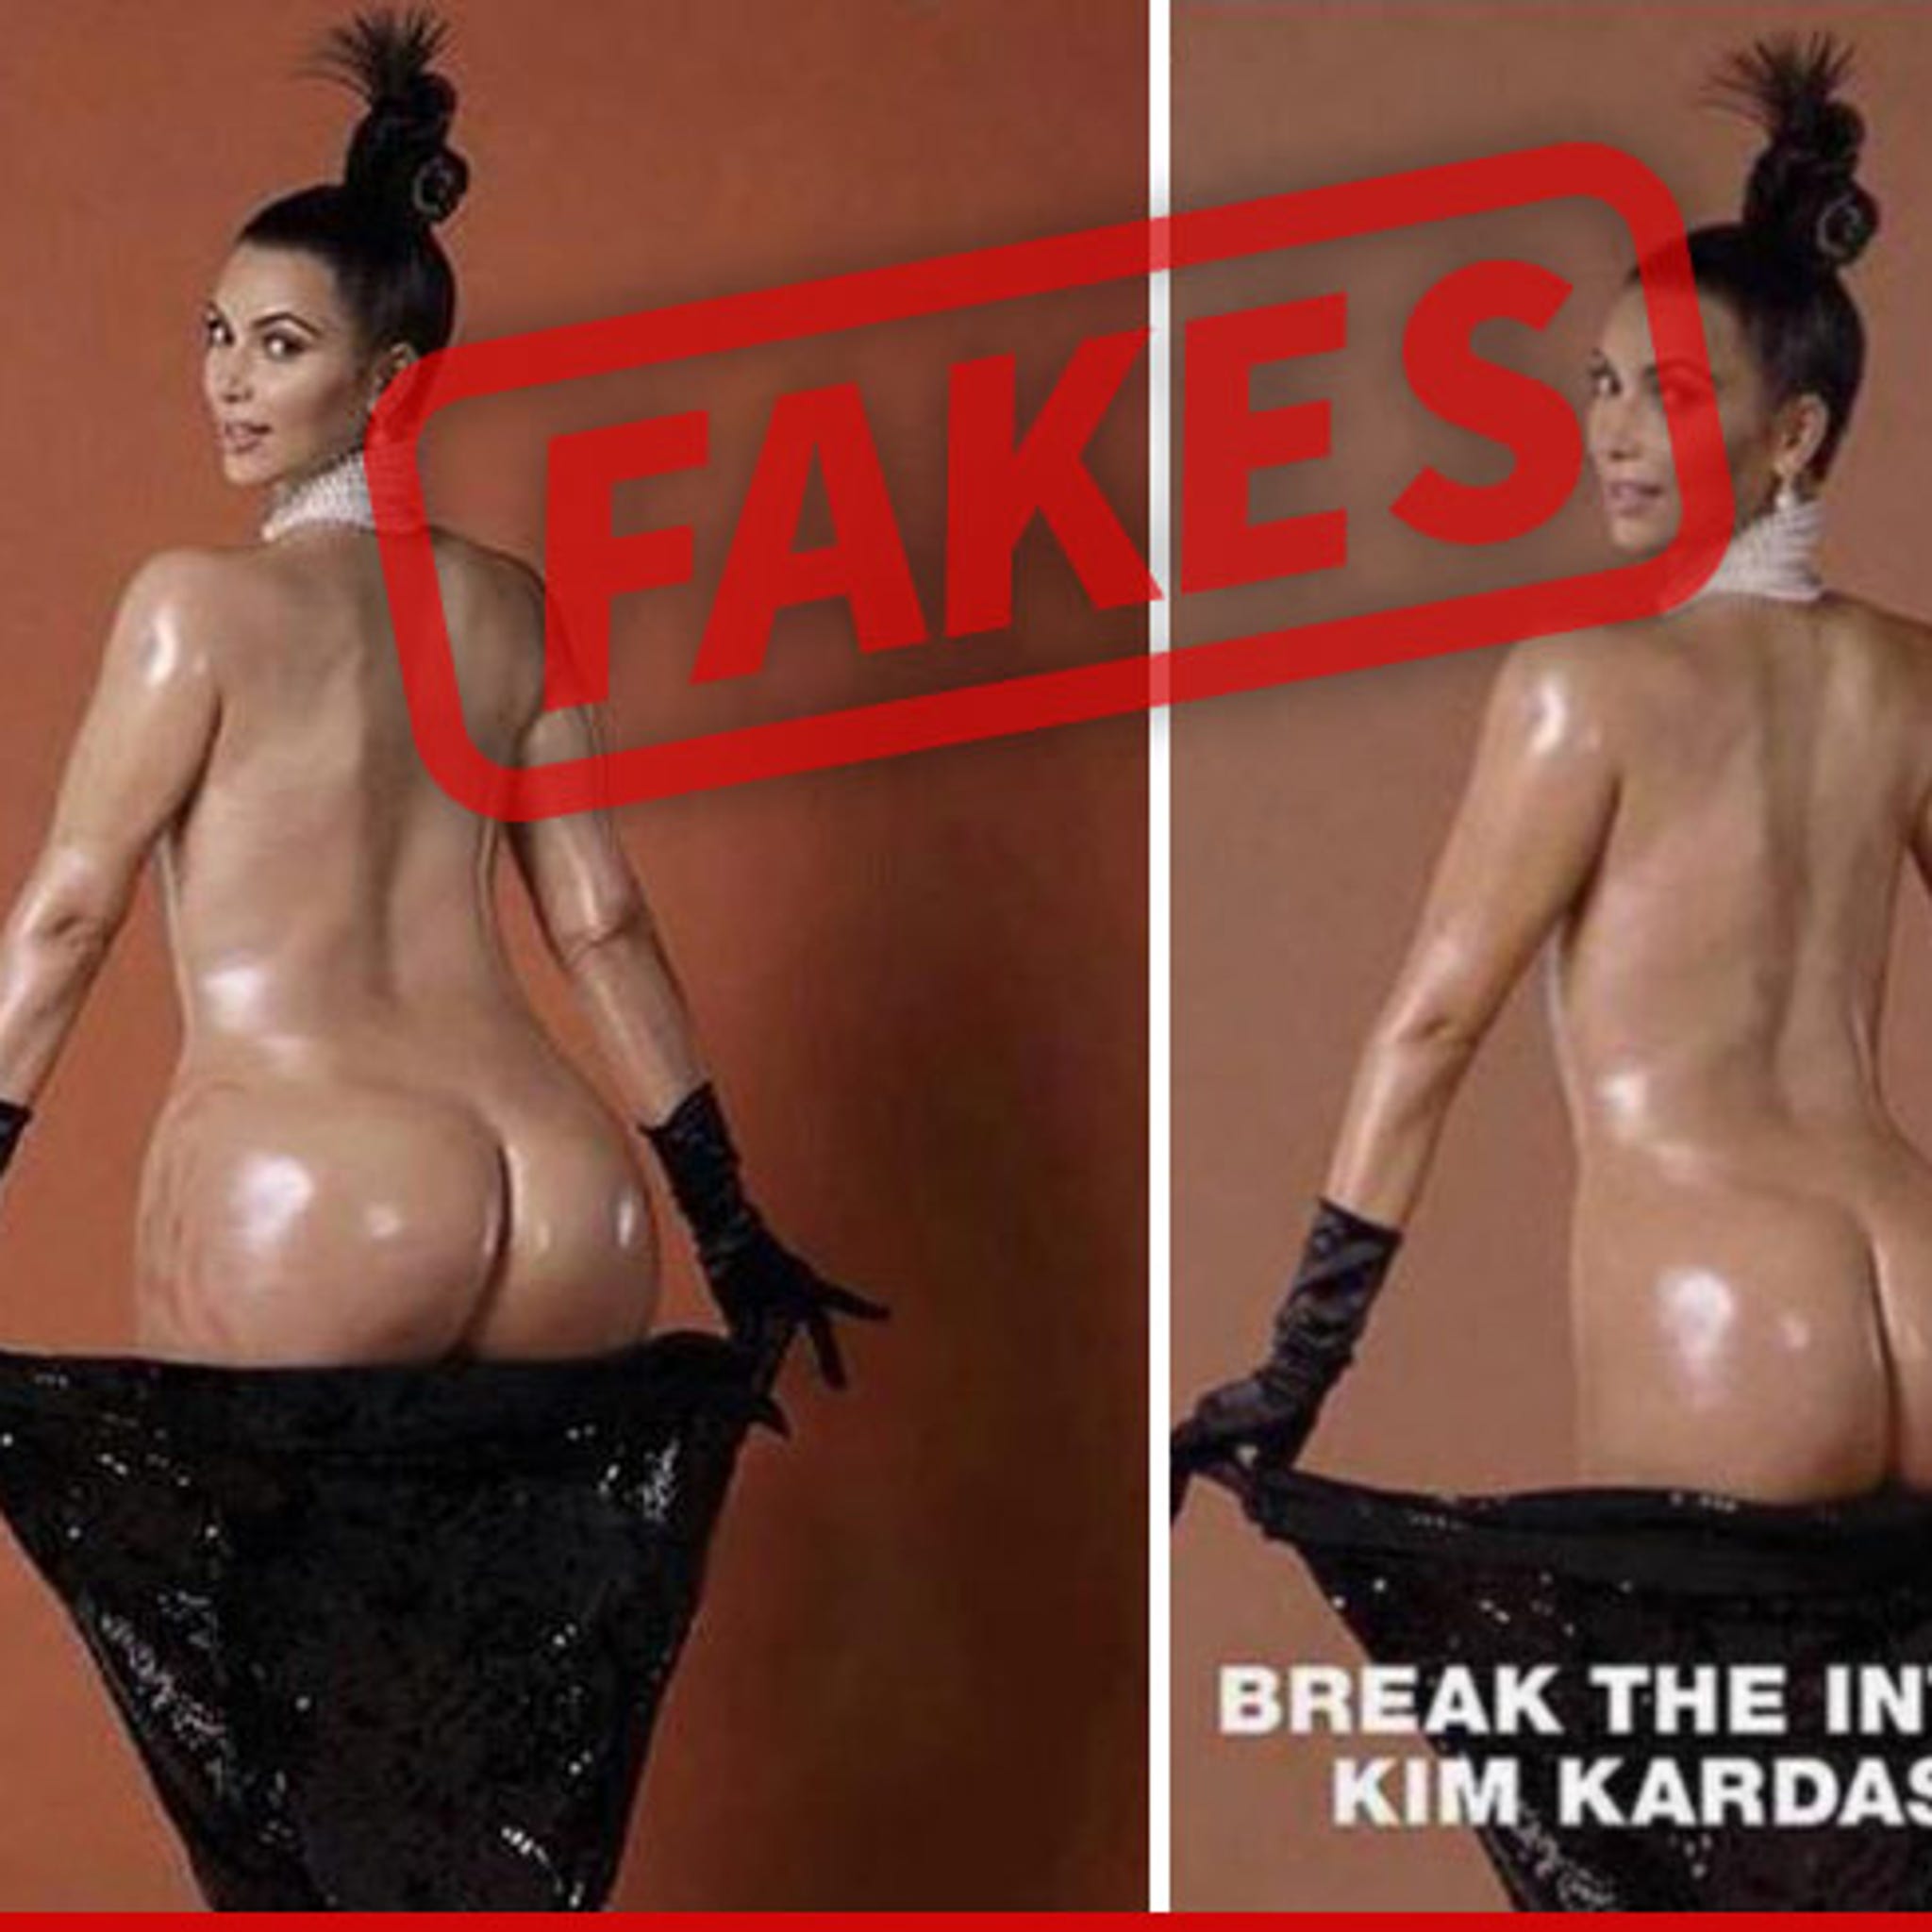 allan mendonca recommends kim kardashian fake nudes pic